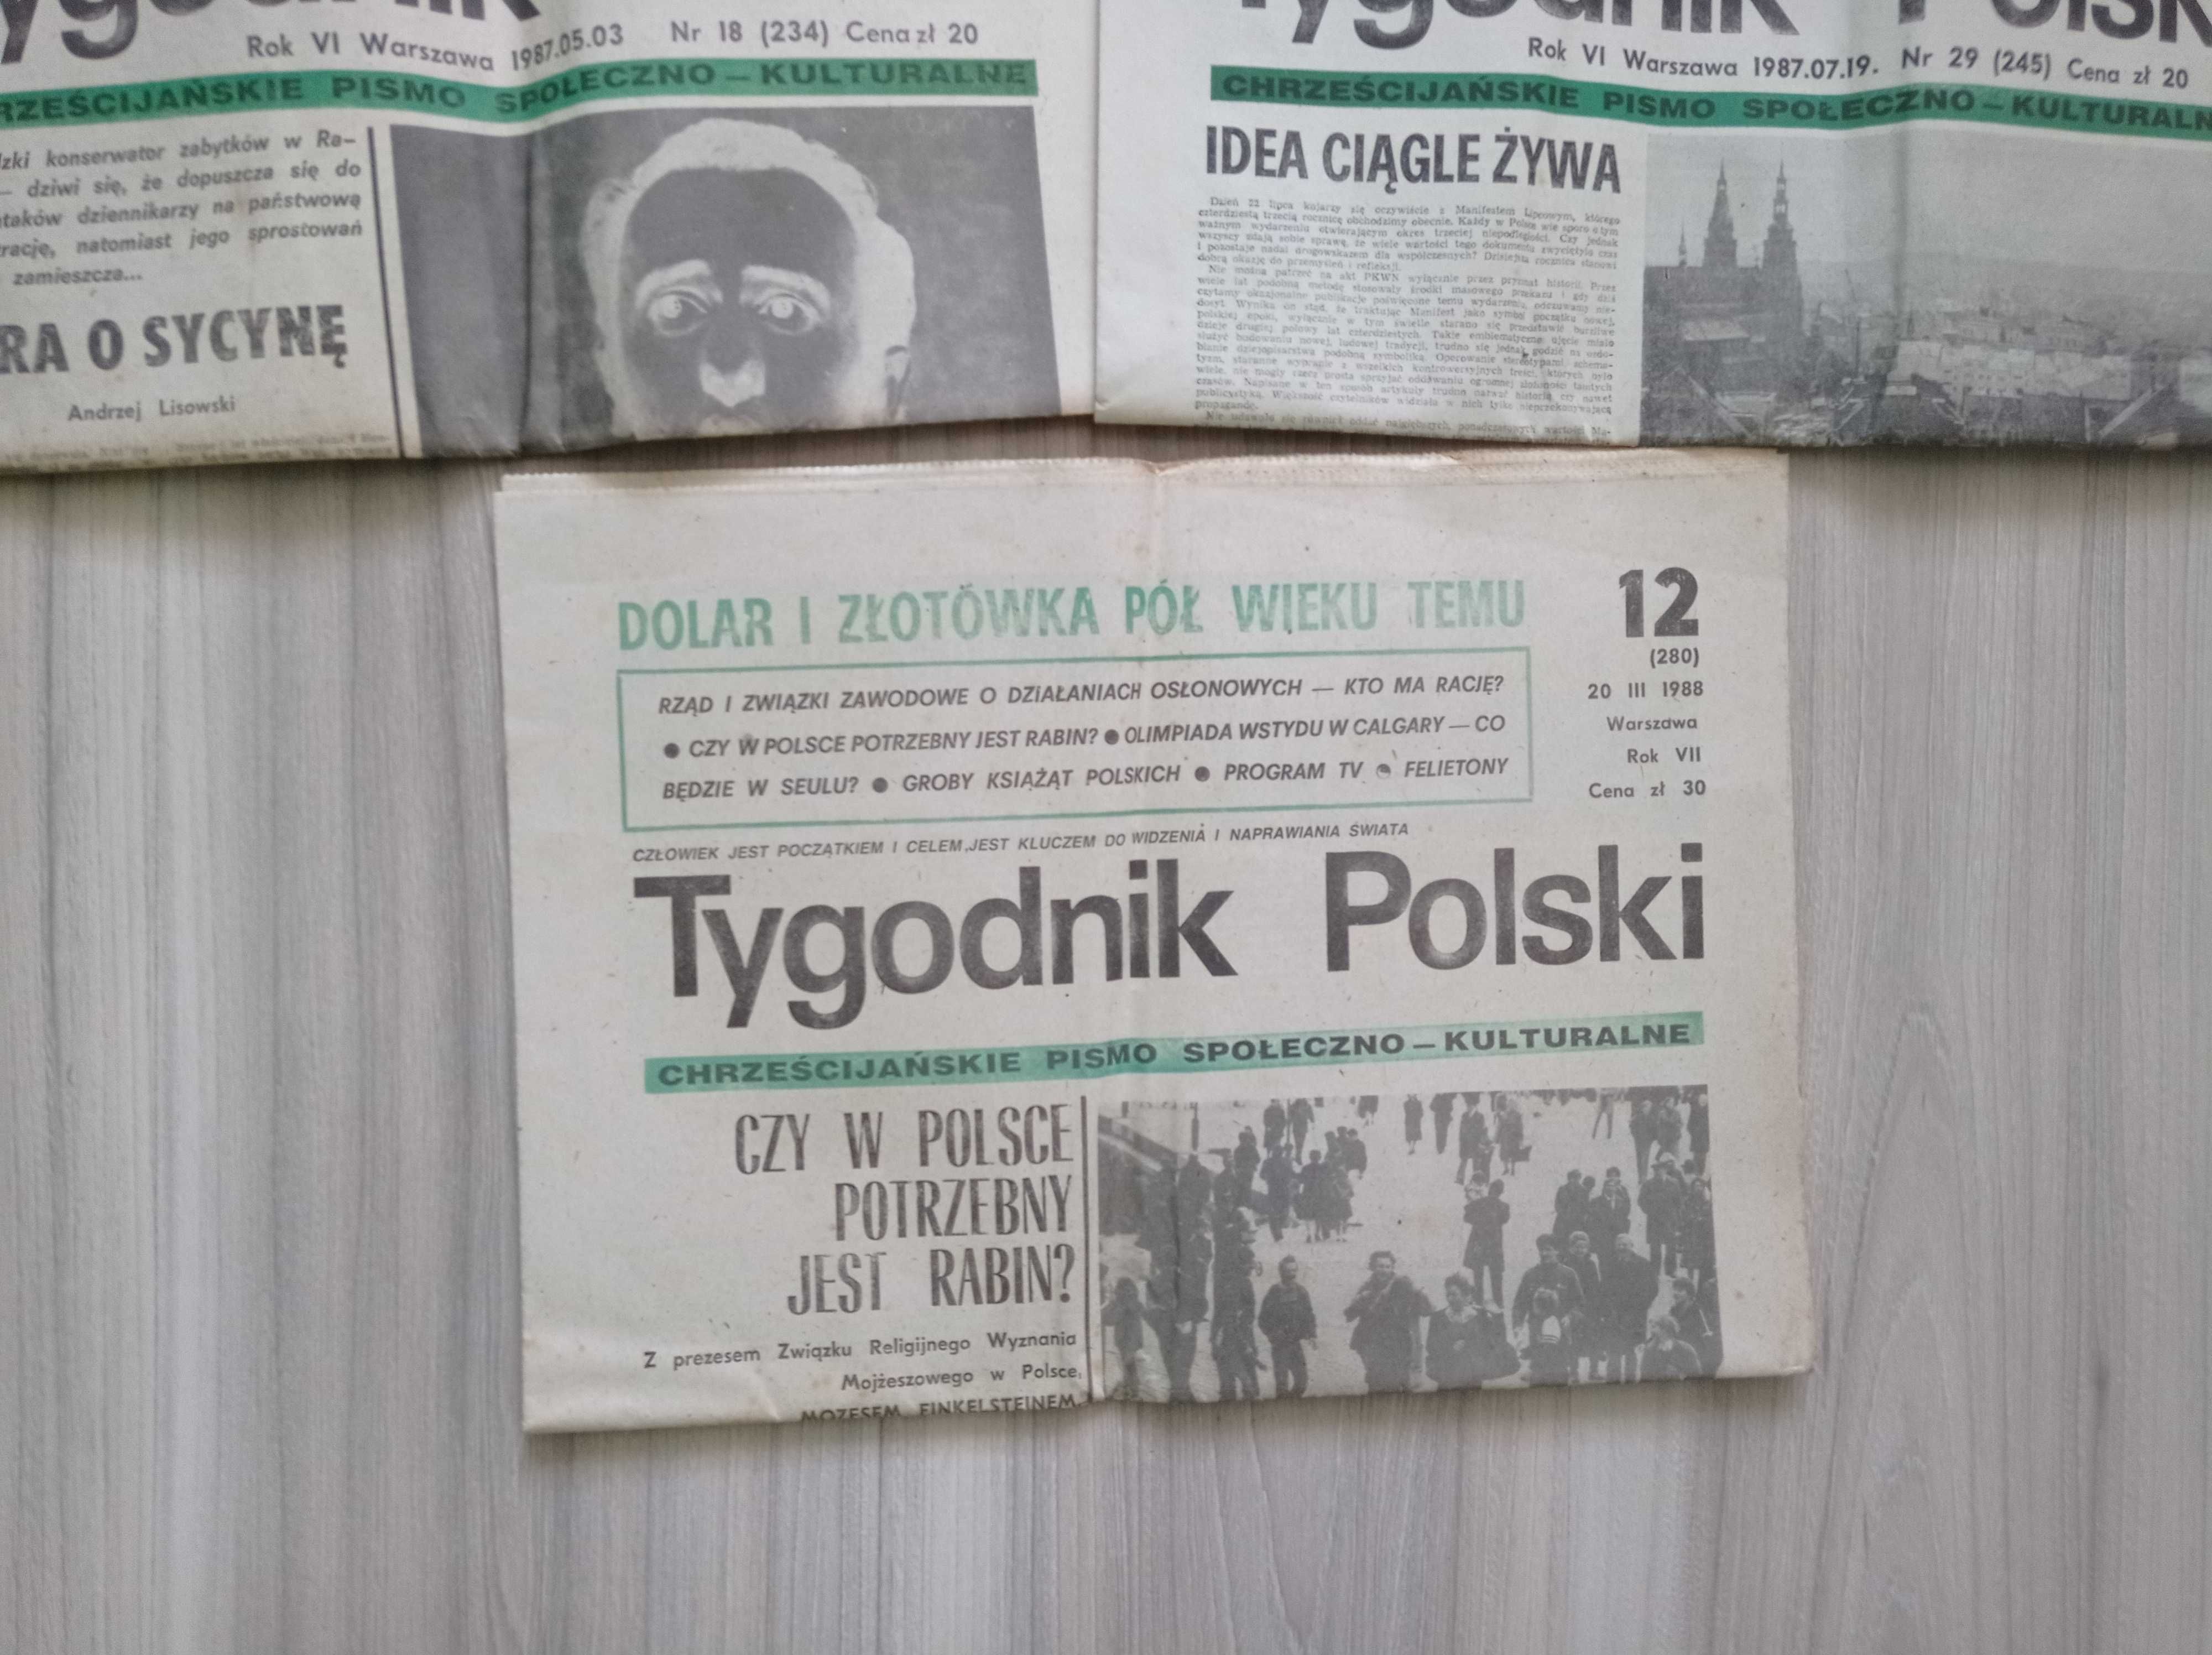 Tygodnik Polski, 1987 i 1988, zestaw